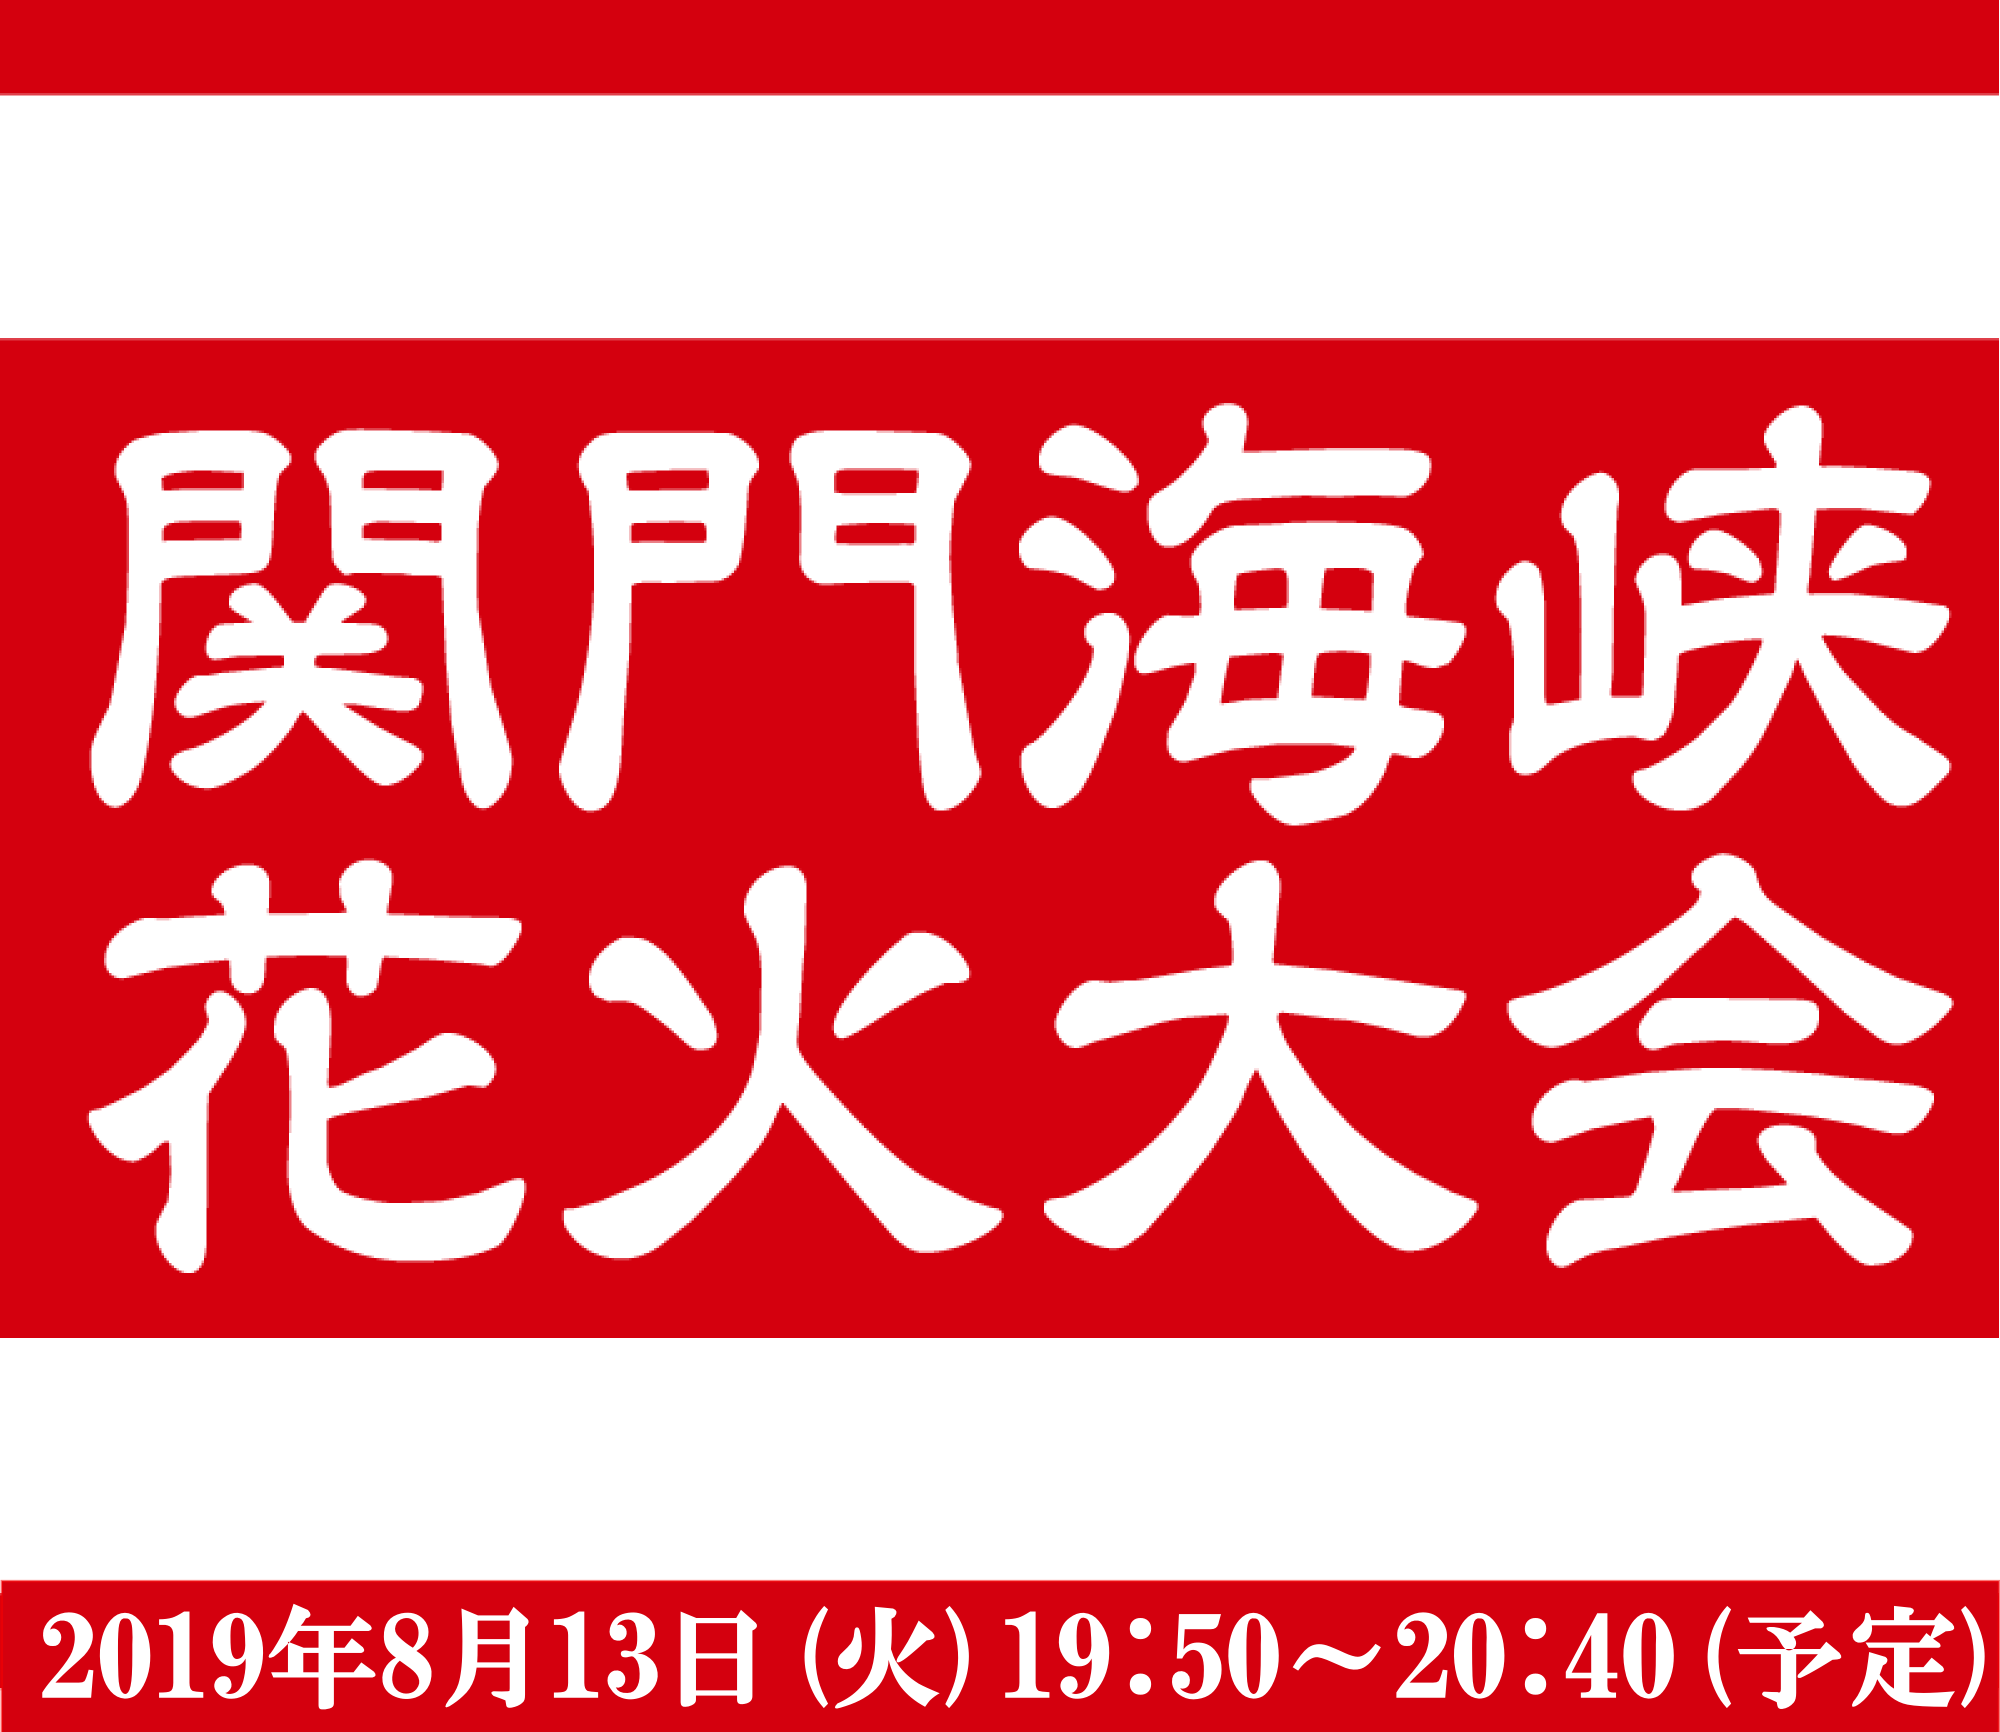 第32回関門海峡花火大会 in 門司港レトロ